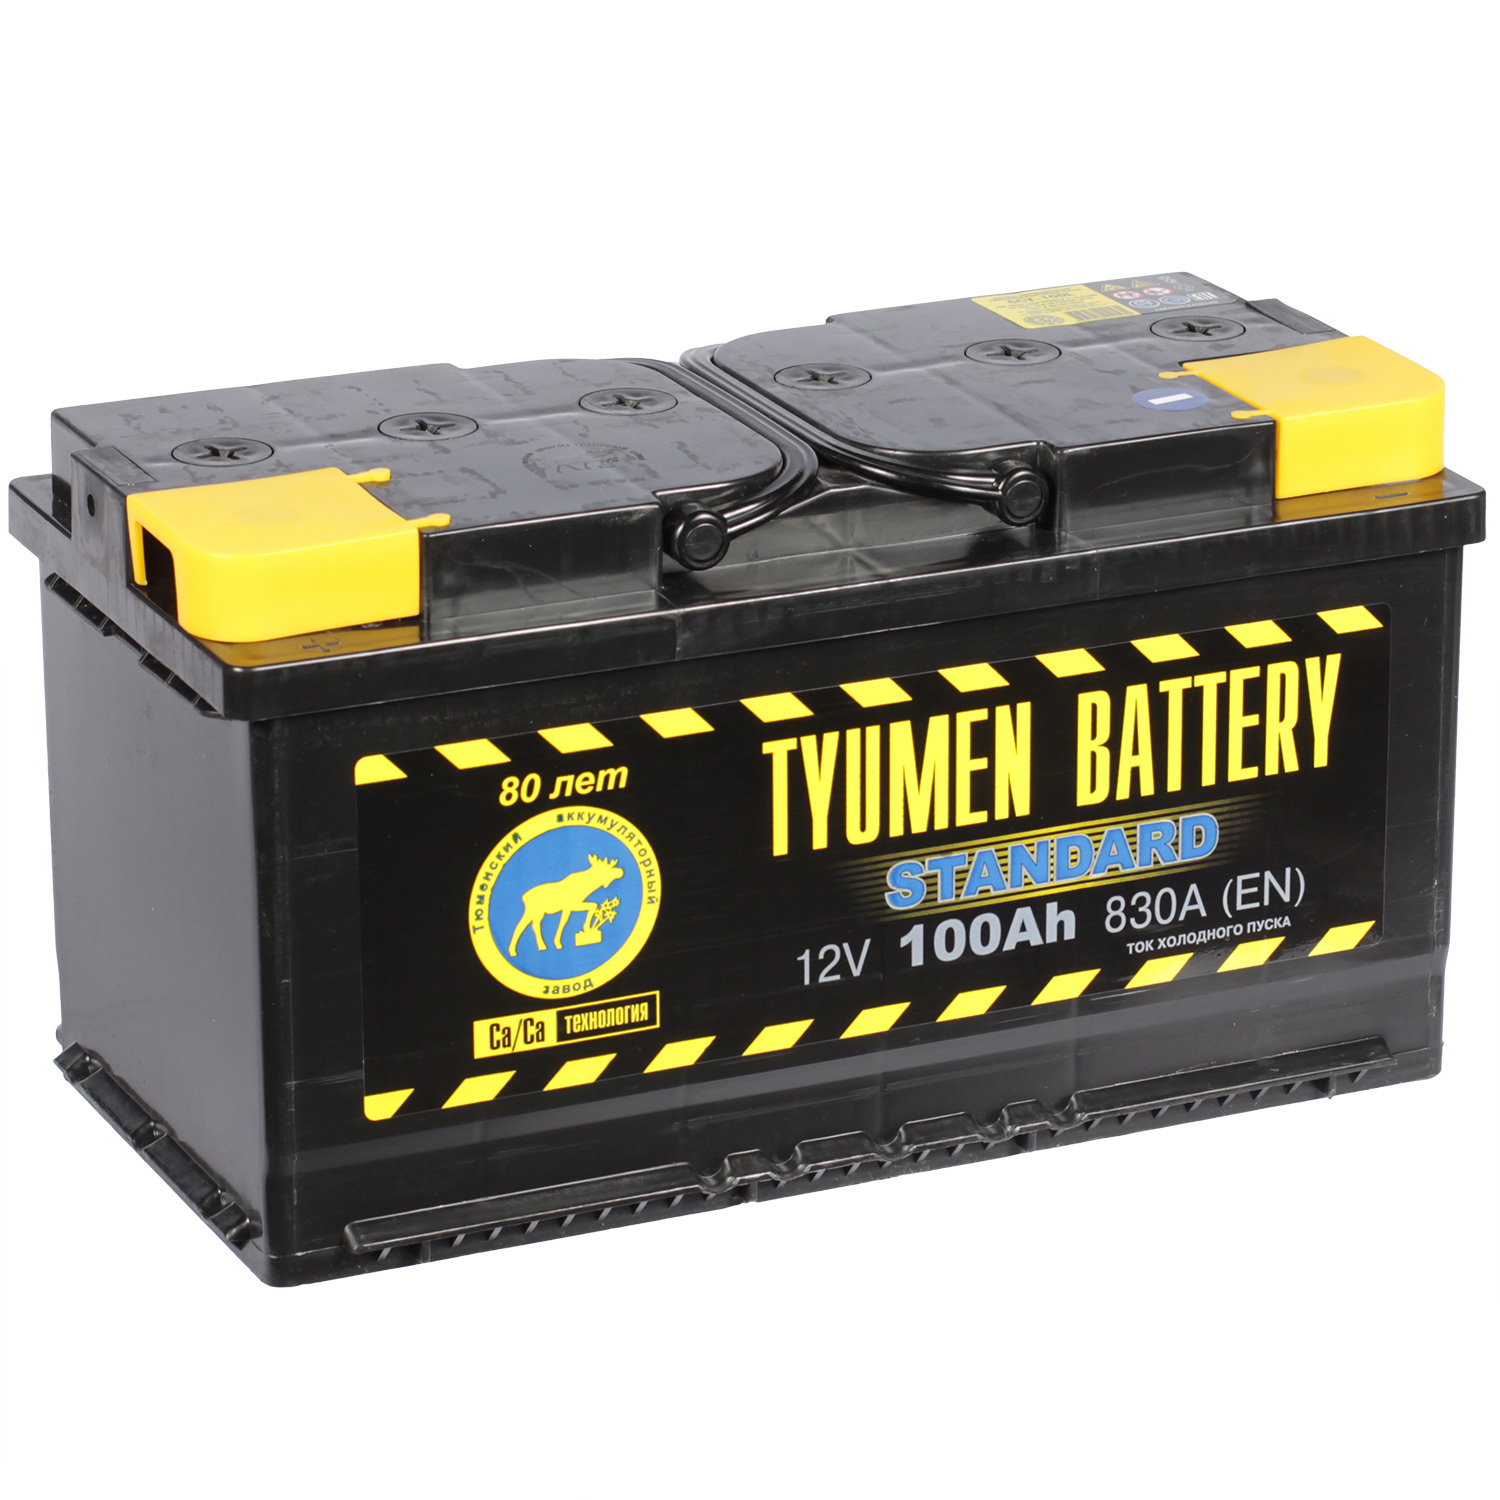 Tyumen Battery Автомобильный аккумулятор Tyumen Battery Standard 100 Ач прямая полярность L5 tyumen battery автомобильный аккумулятор tyumen battery asia 40 ач обратная полярность b19l